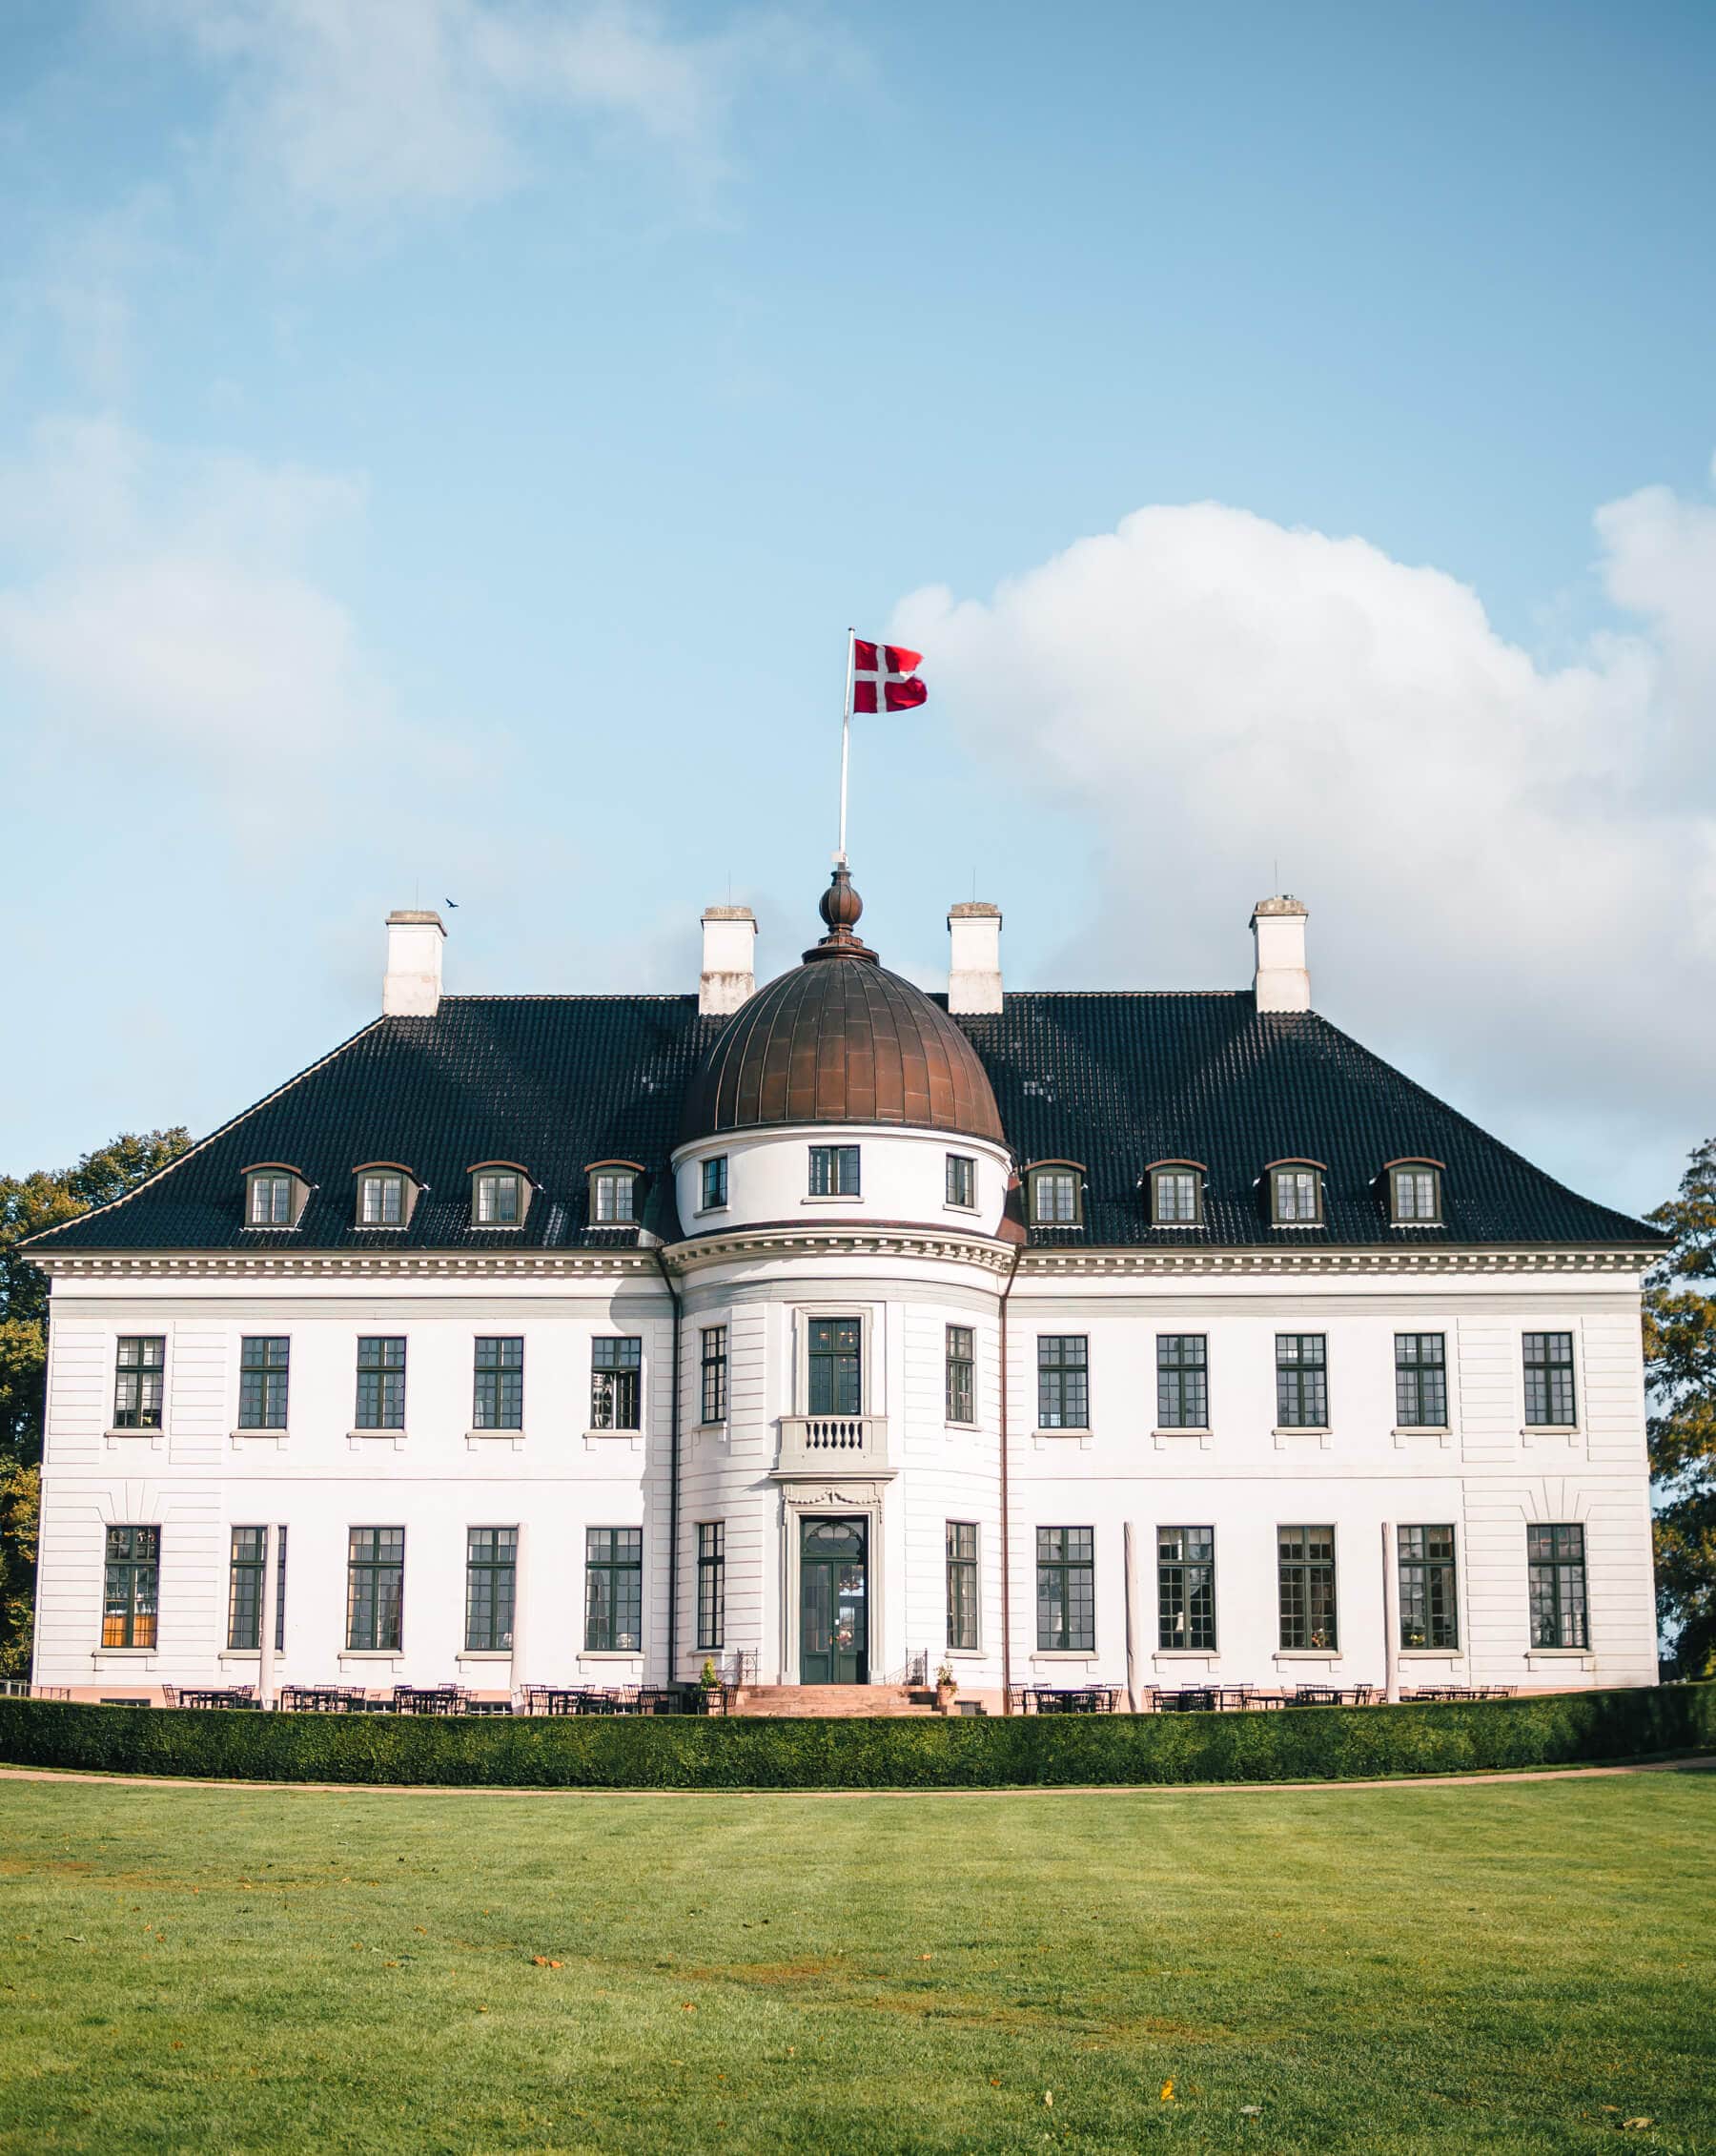 Bernstorff Castle Hotel outside Copenhagen - The perfect place to stay in Denmark